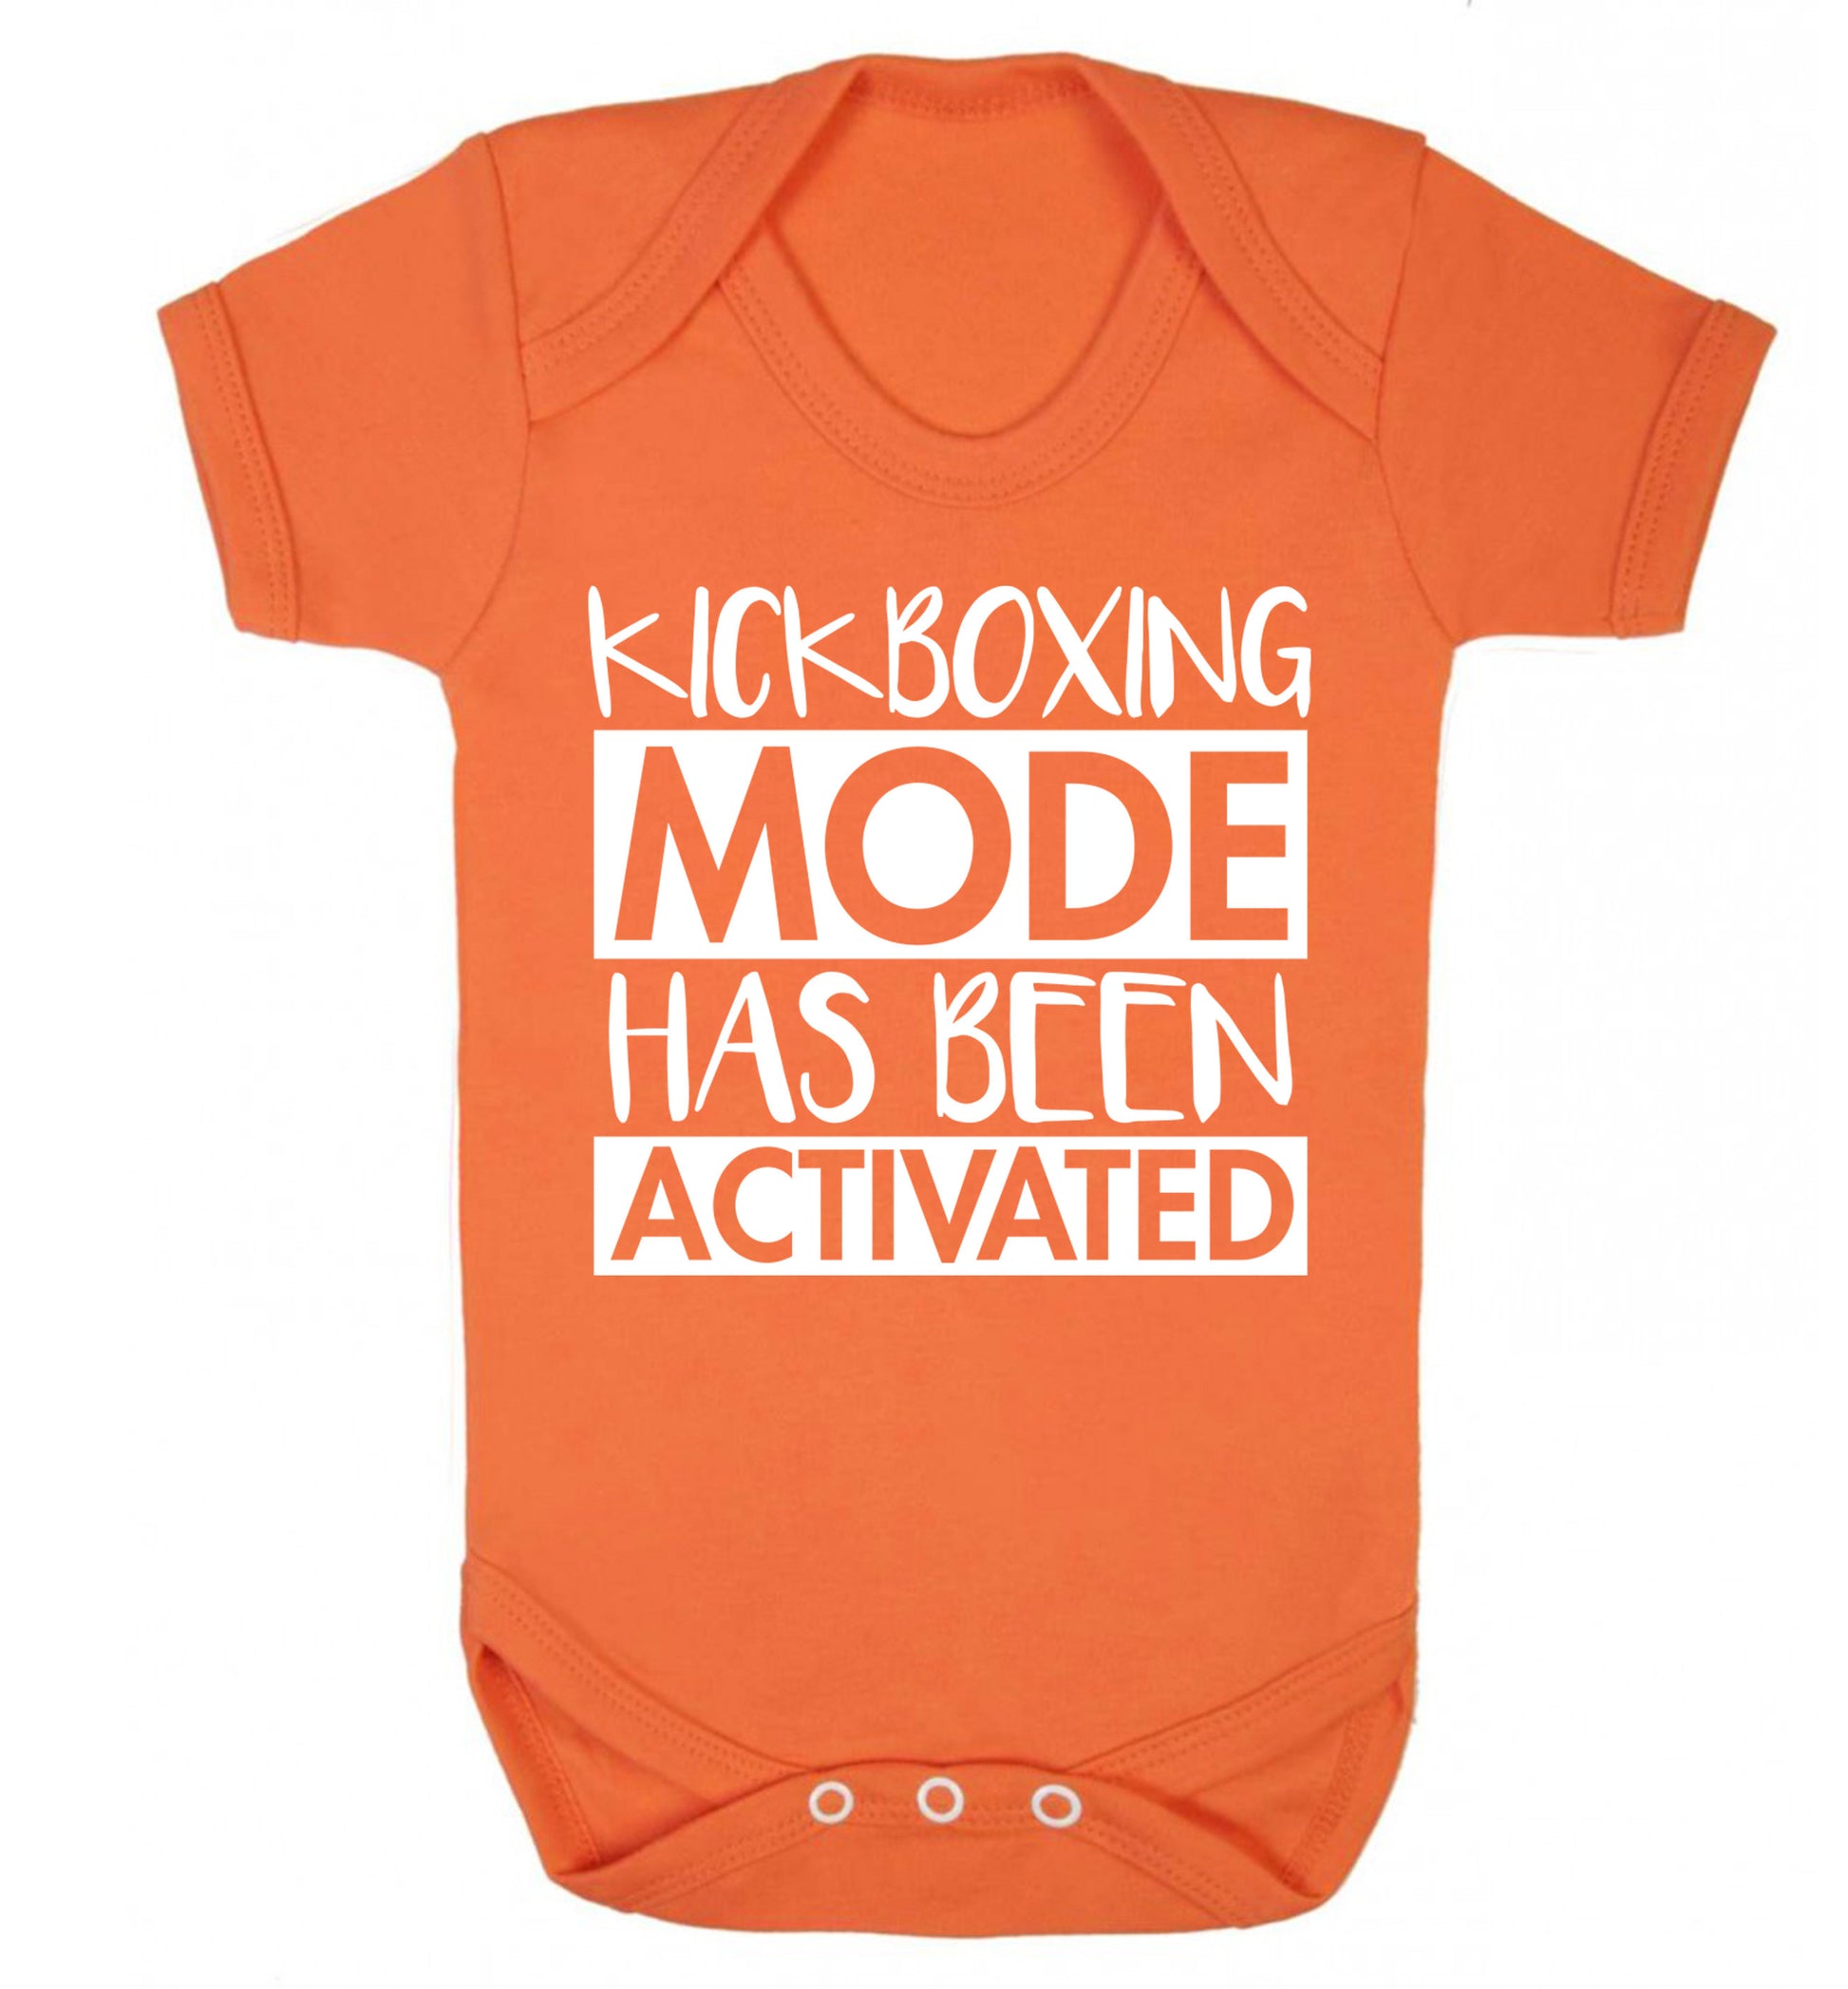 Kickboxing mode activated Baby Vest orange 18-24 months